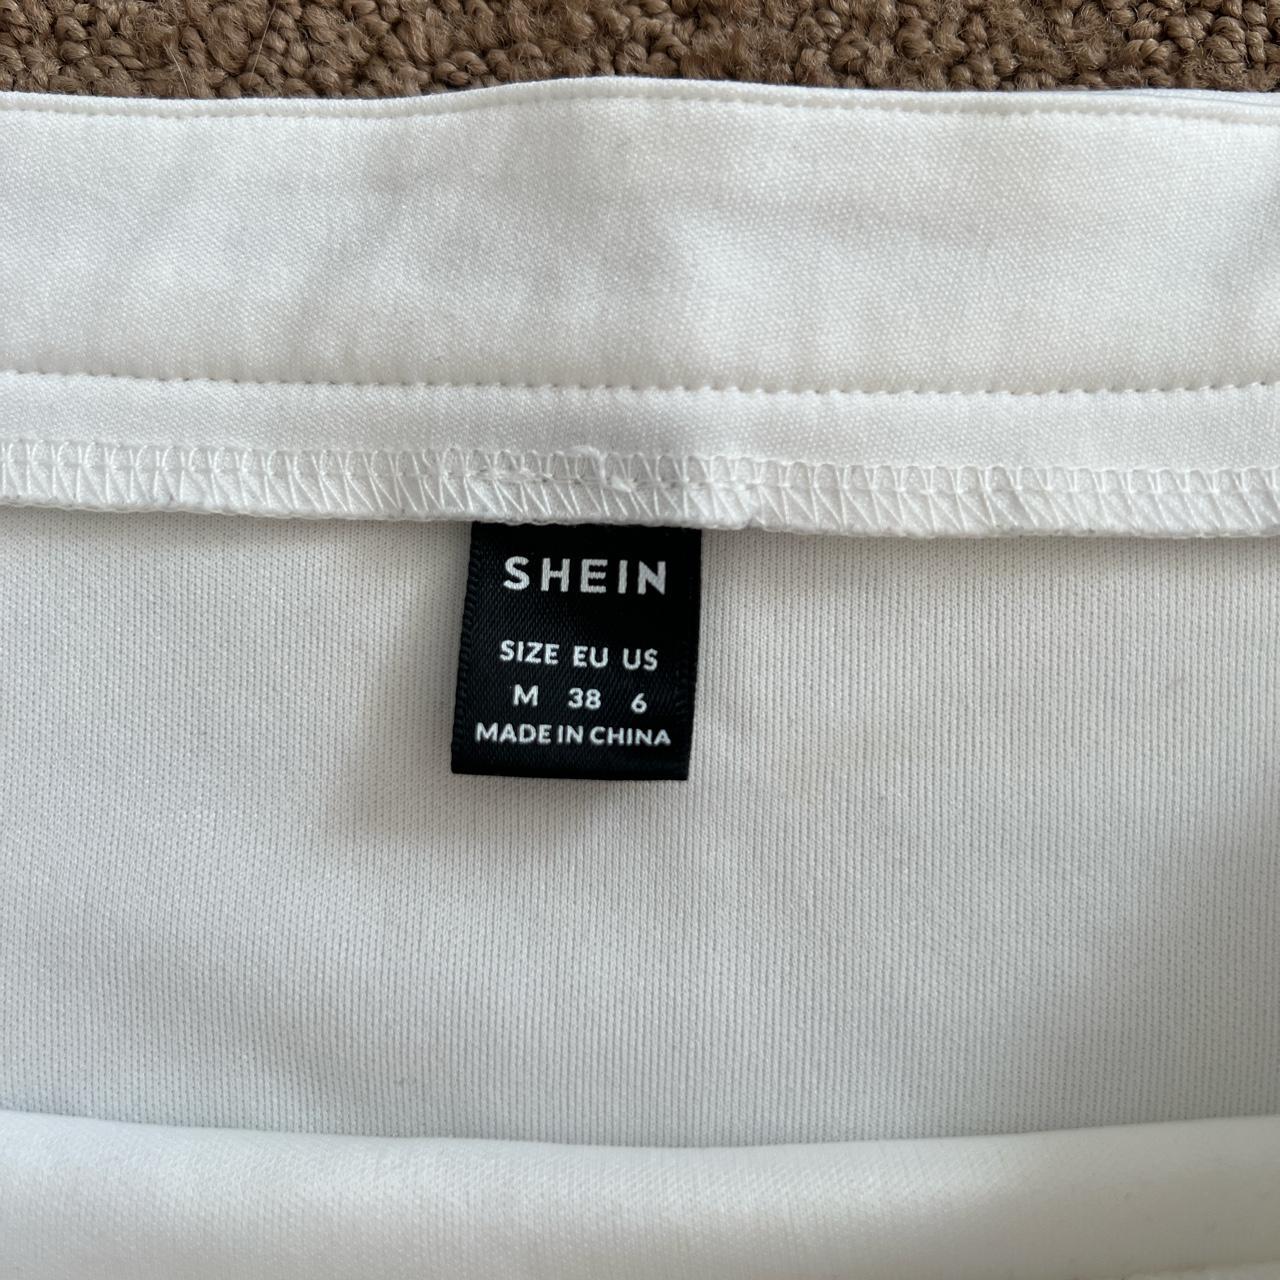 Shein - skirt w shorts built in, zipper on the side... - Depop